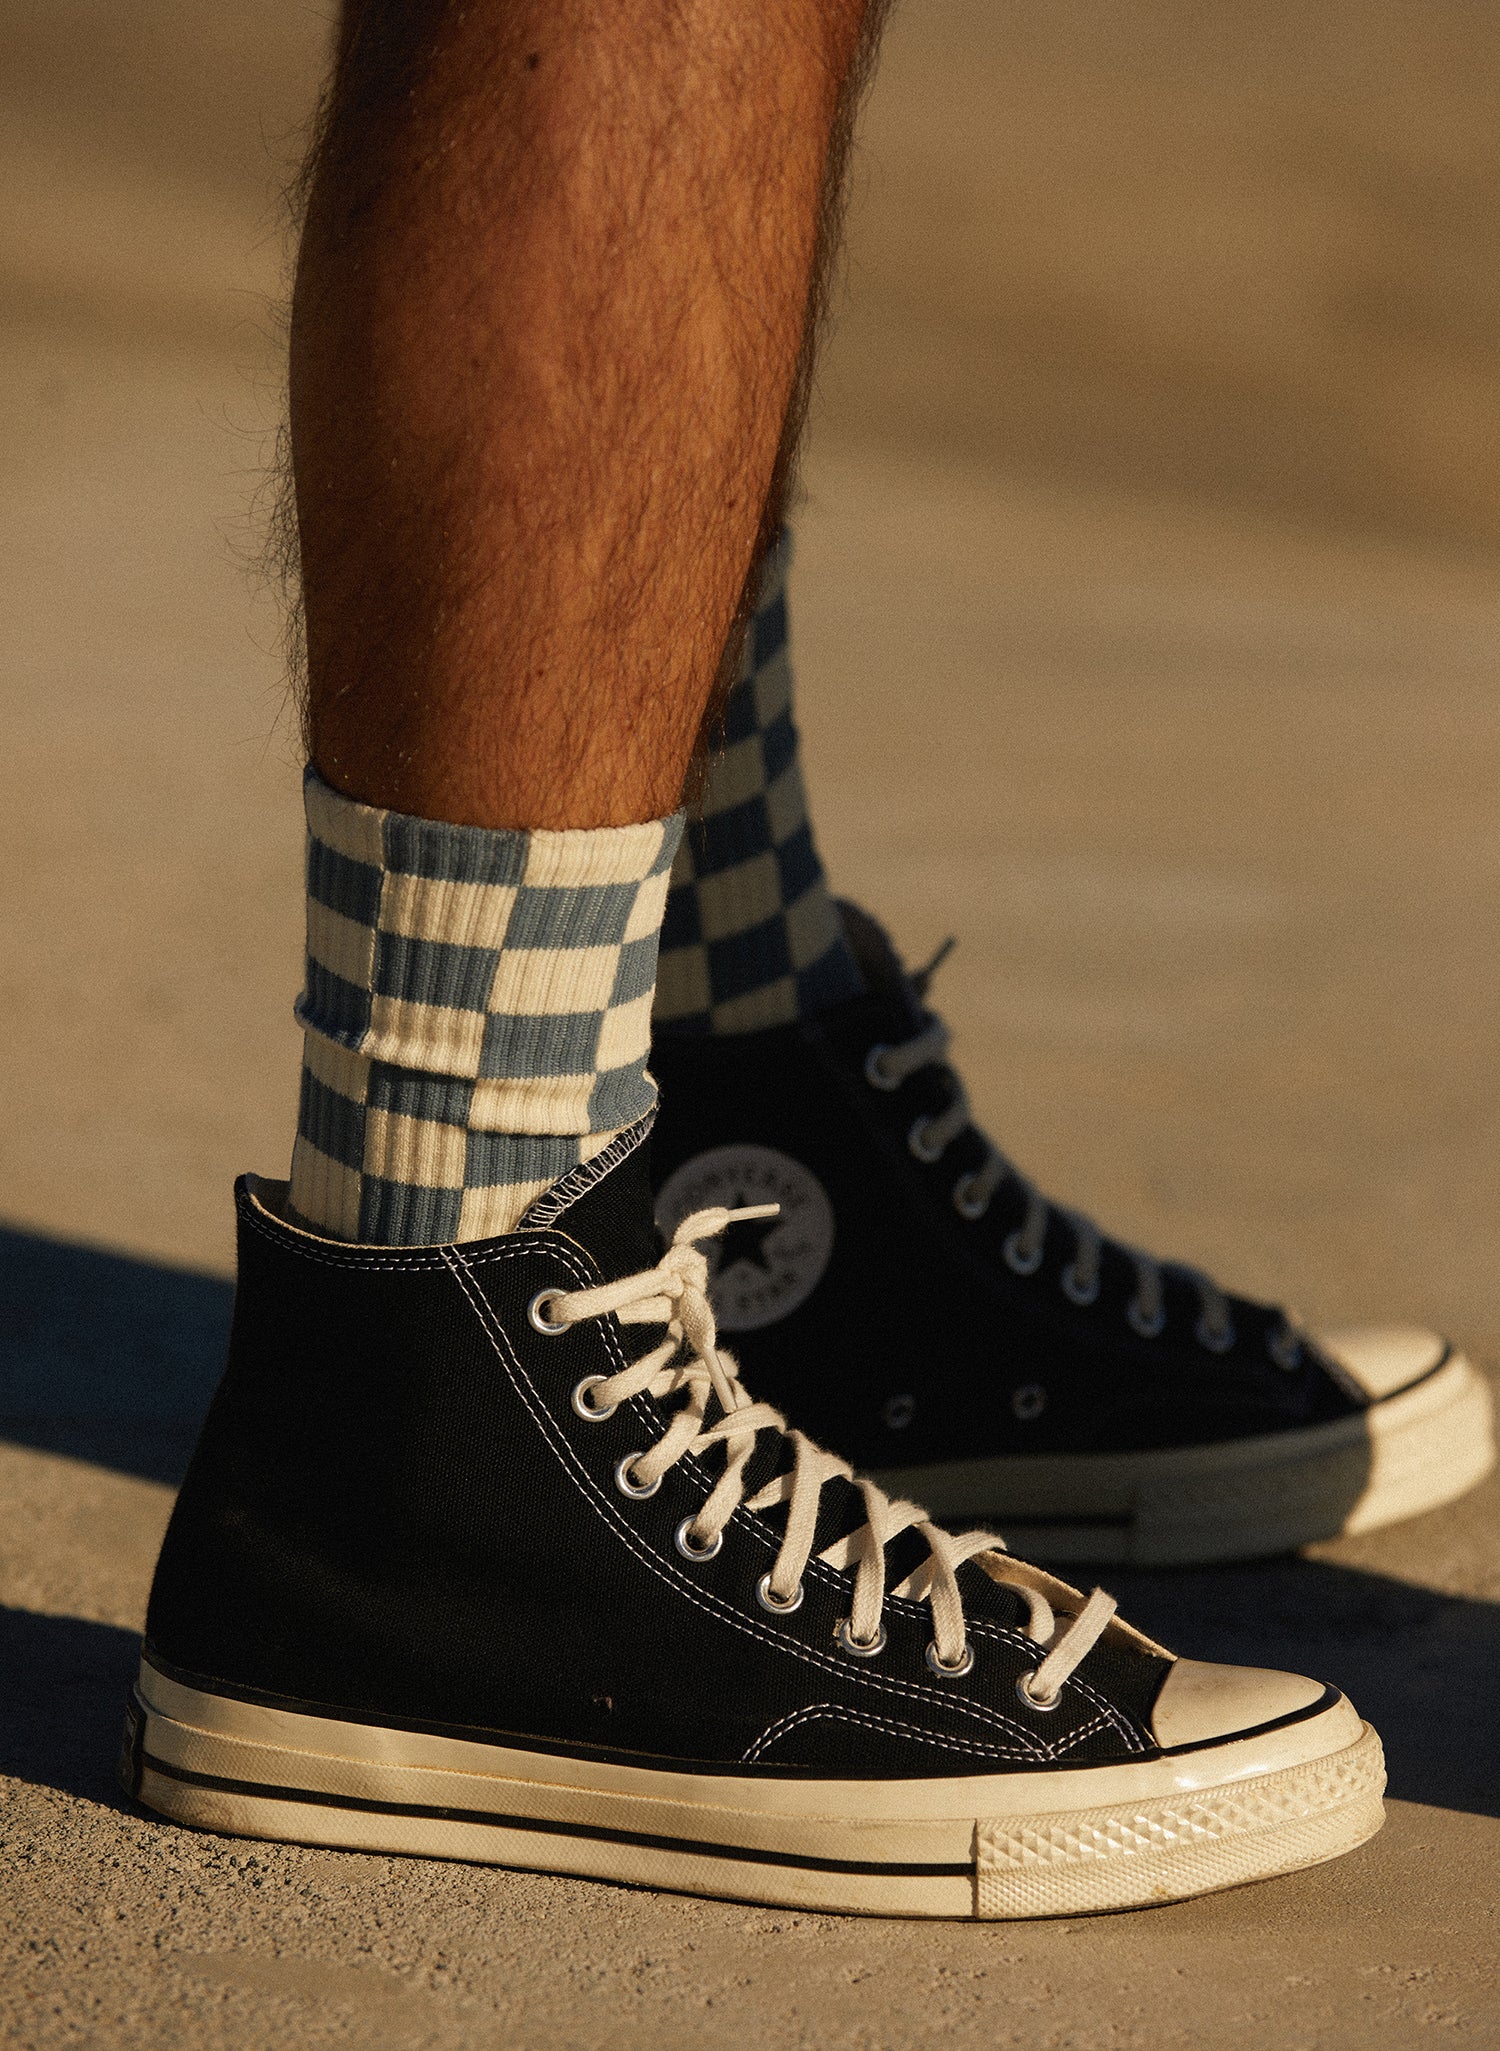 Weld Mfg Comfy Socks - Vintage Retro Checkerboard Socks - Earthy Colored Socks - Wholesale Blank Socks